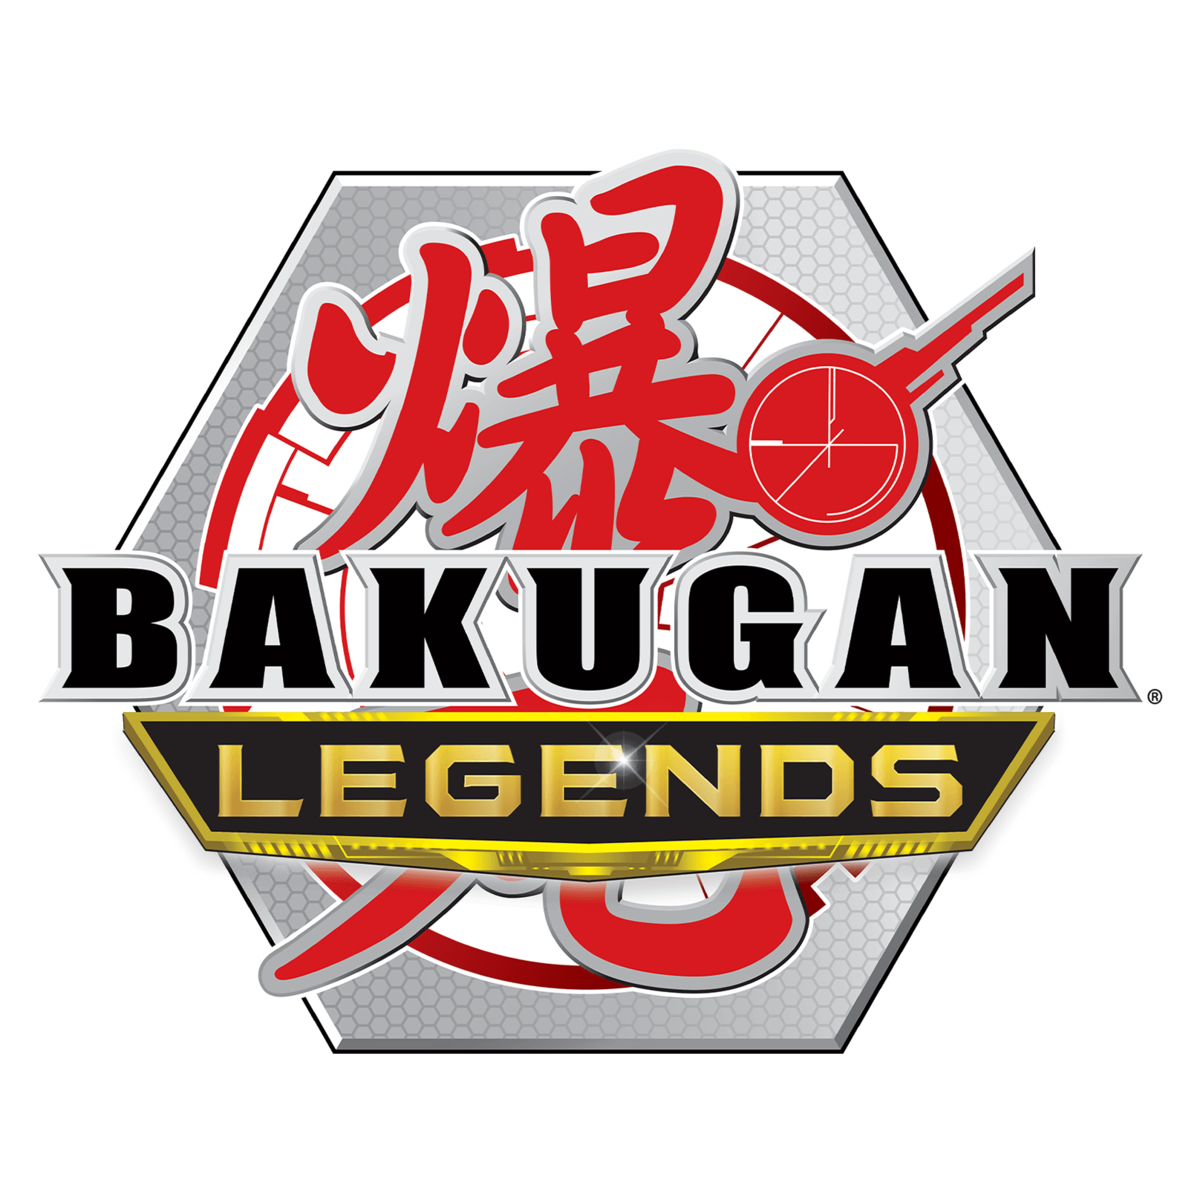 https://bakugan.wiki/images/thumb/7/73/Bakugan_Legends_Logo.png/1200px-Bakugan_Legends_Logo.png